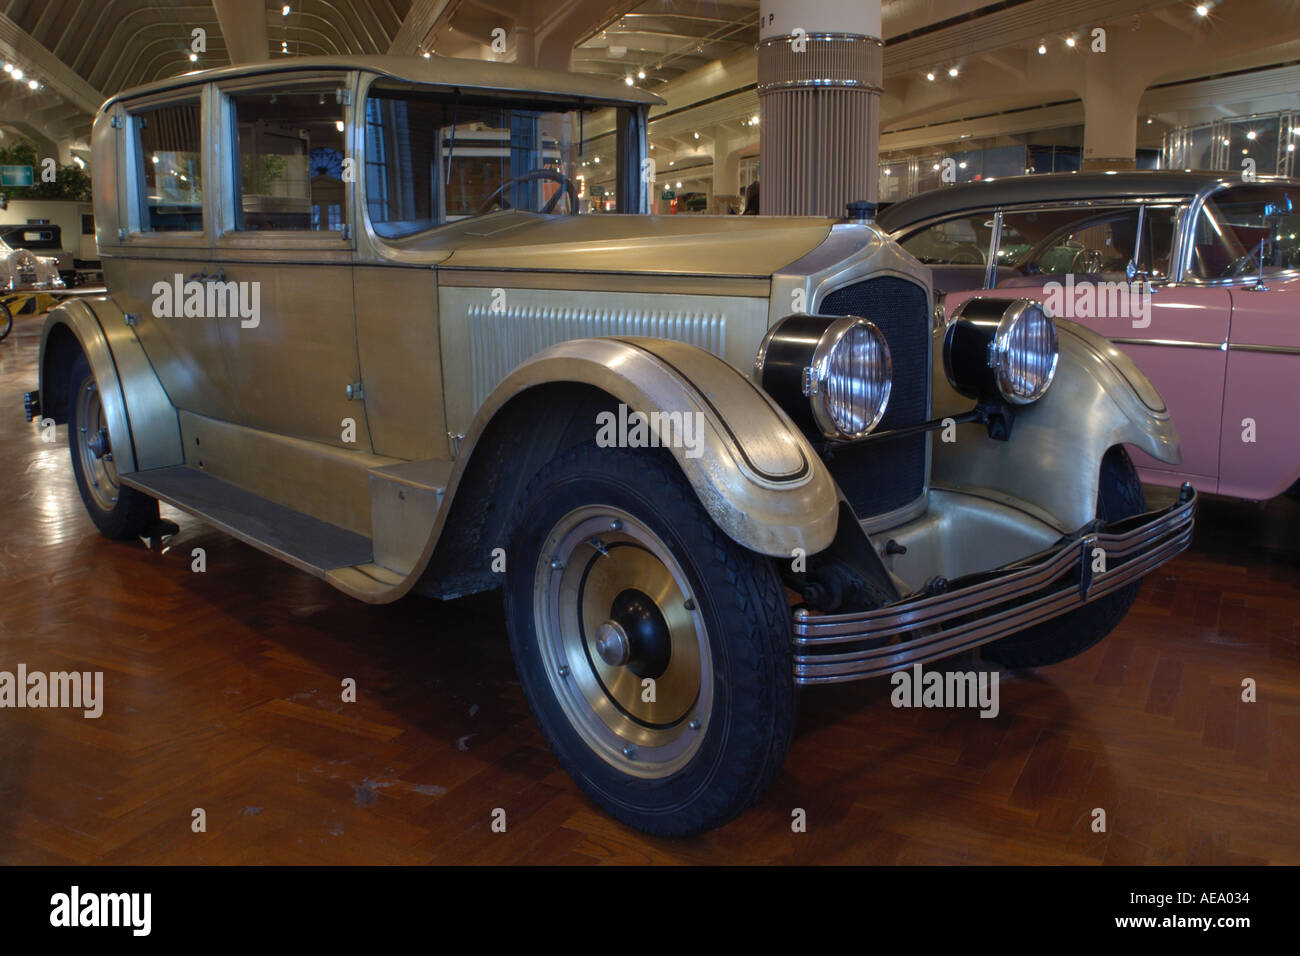 1925 Alcoa Pierce Arrow experimental aluminum car on display at the Henry Ford Museum Stock Photo